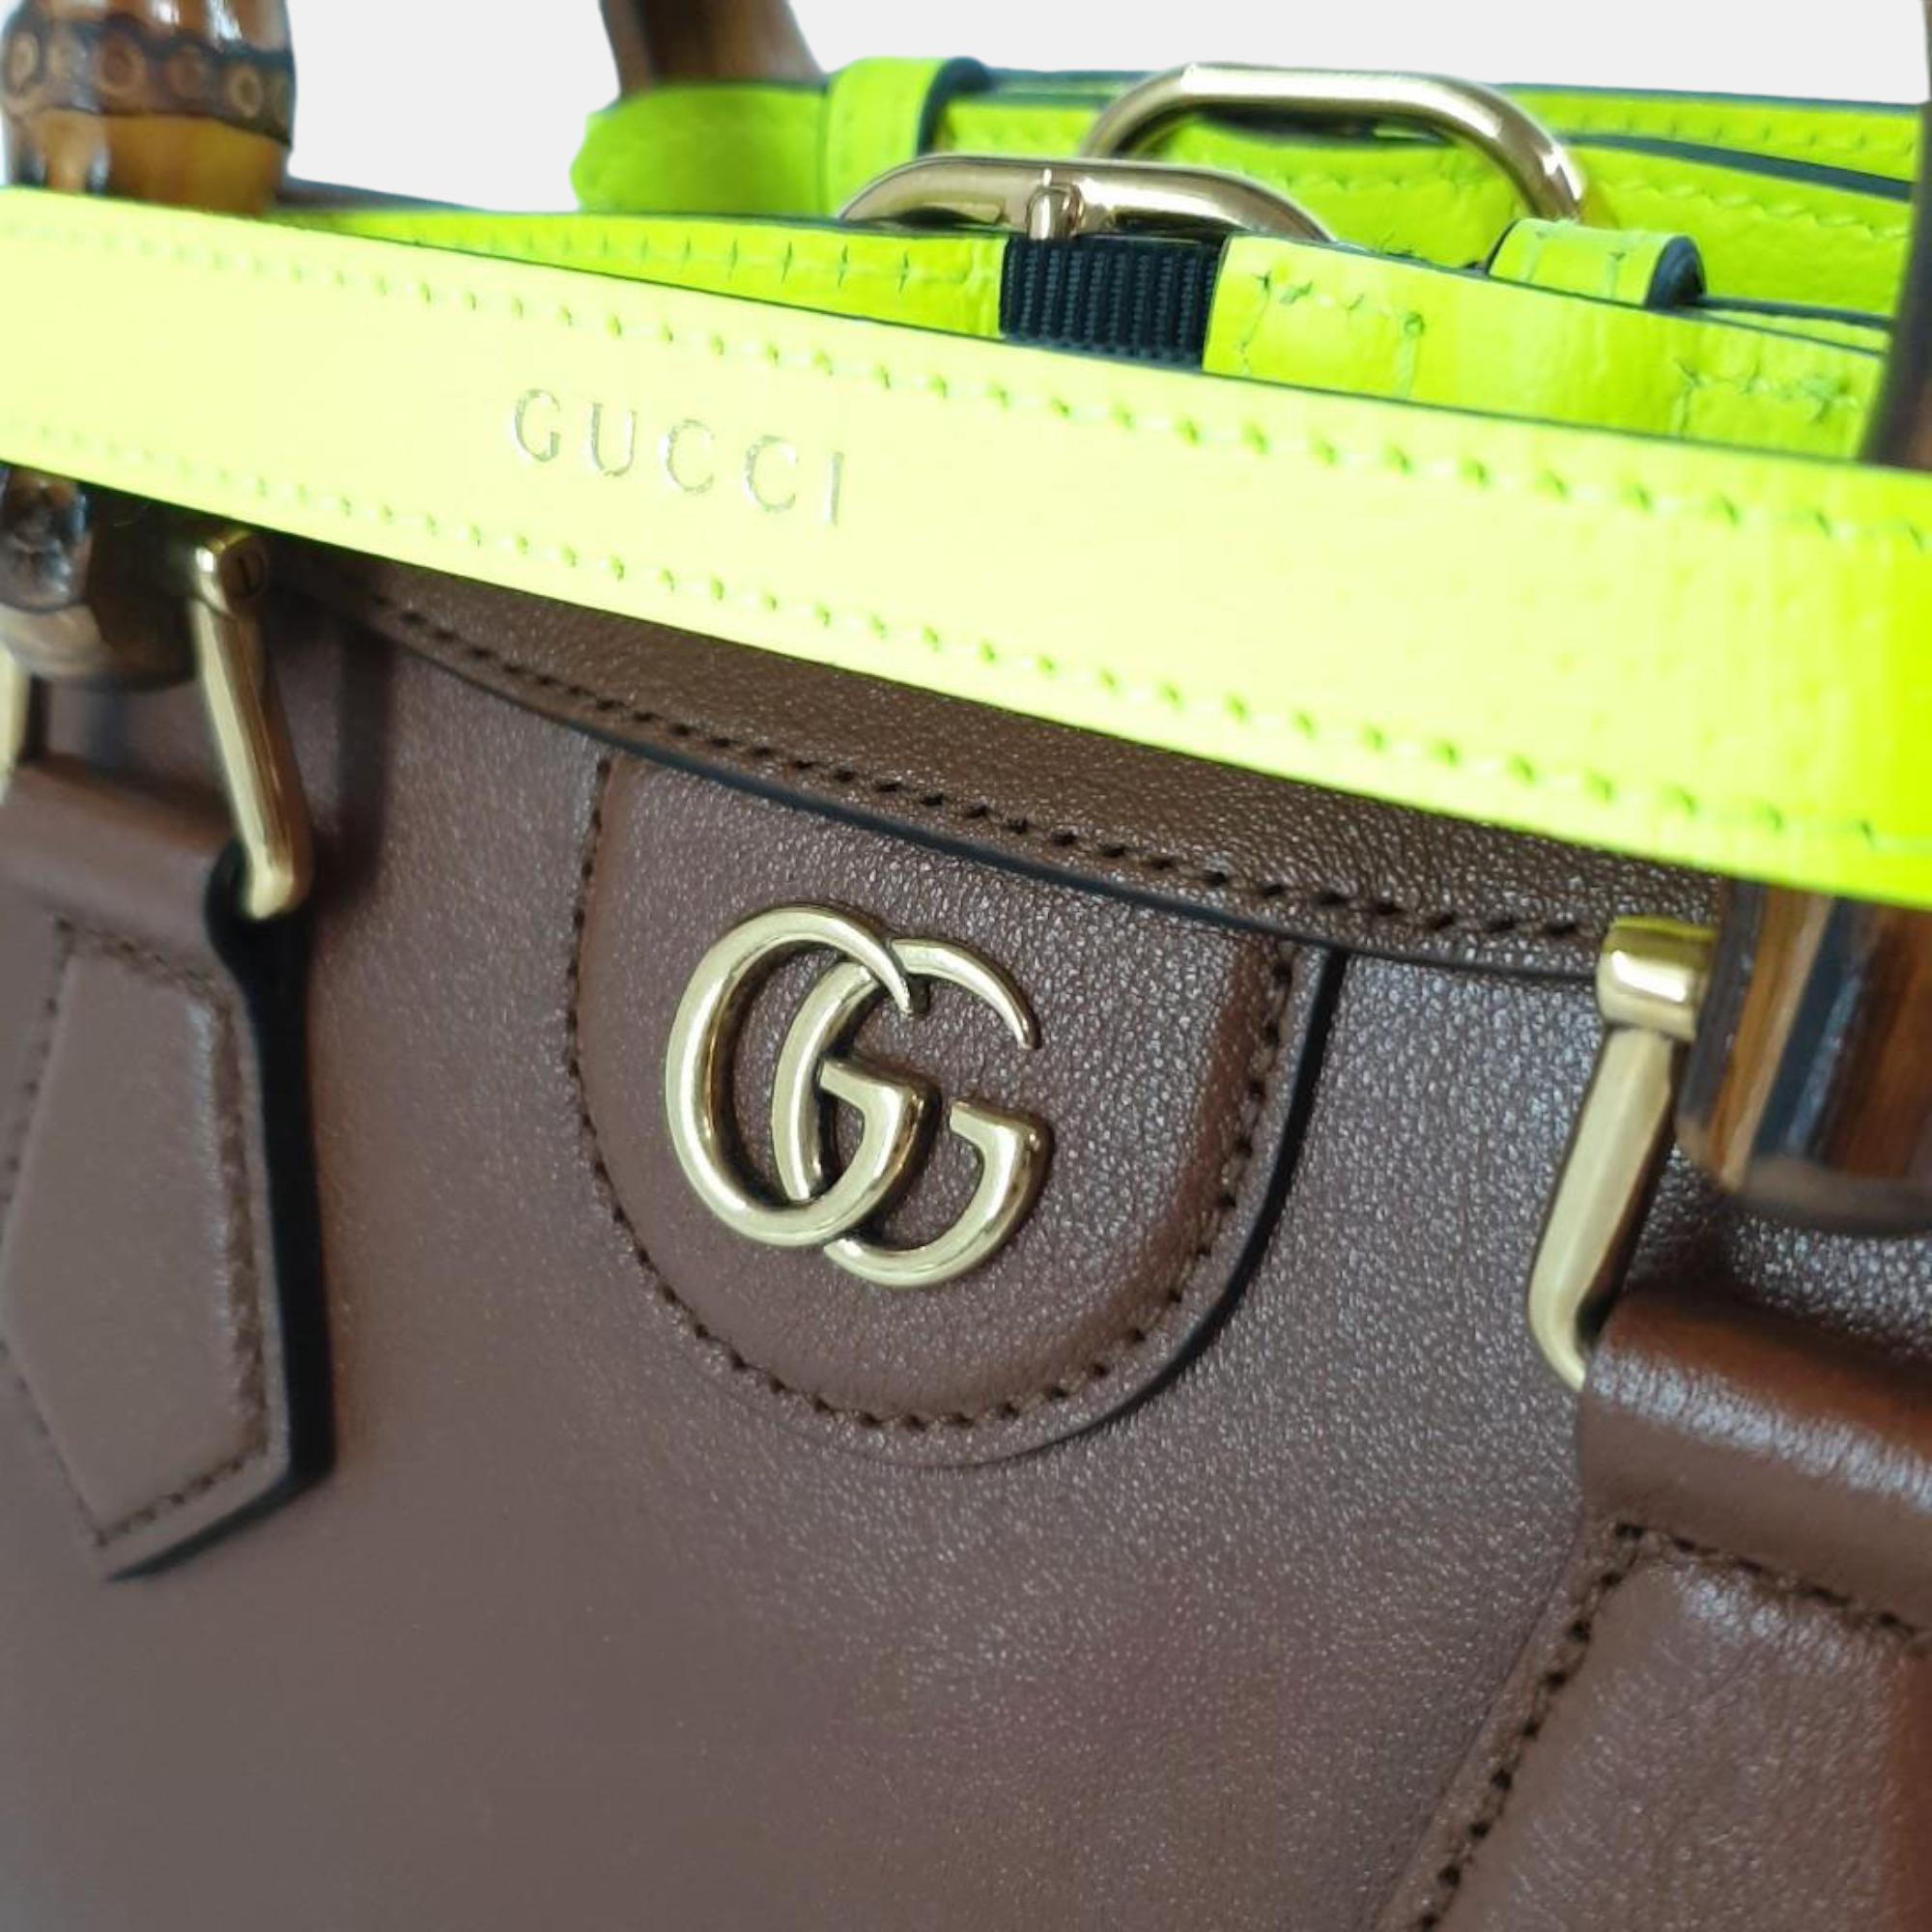 Gucci Diana Tote And Shoulder Bag (655661)